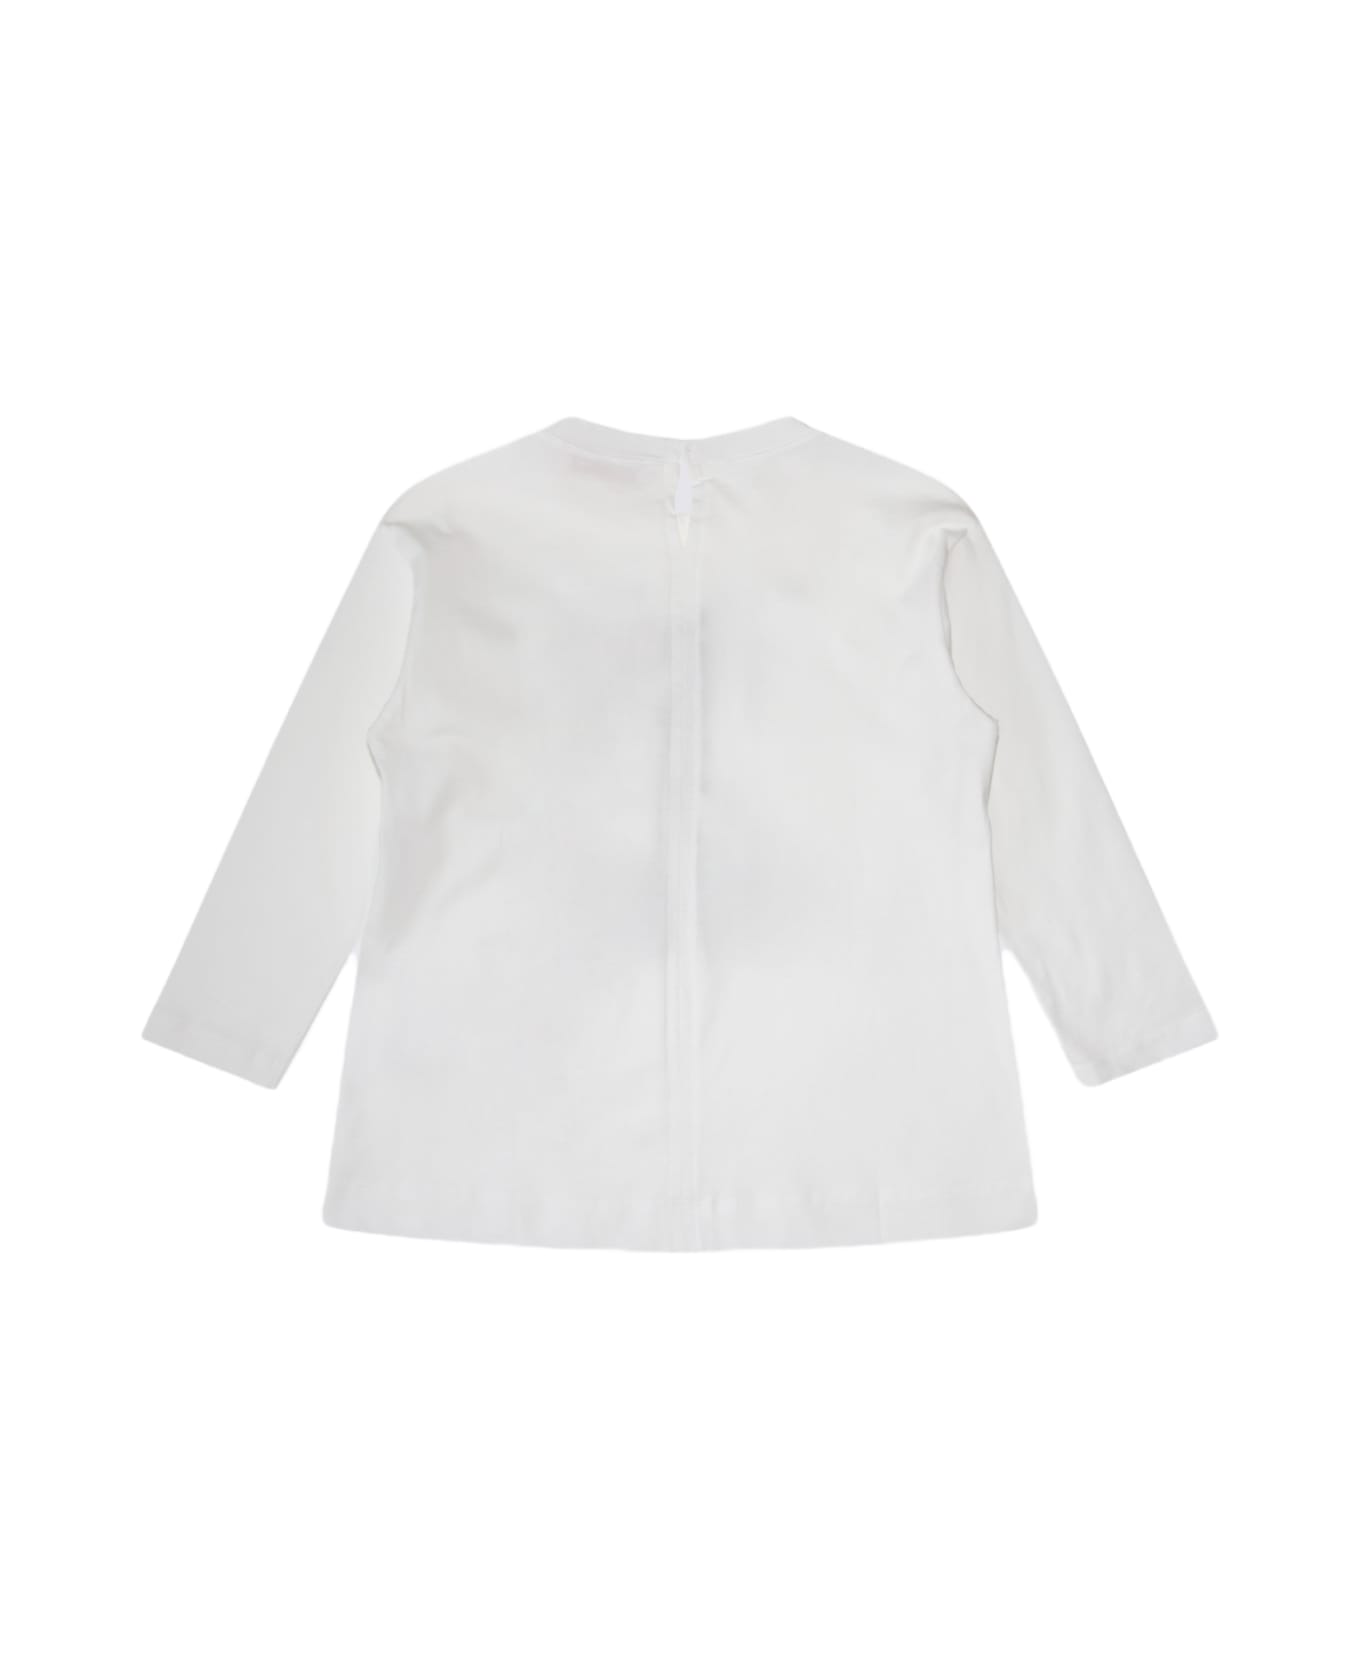 Monnalisa White Cotton T-shirt - Cream